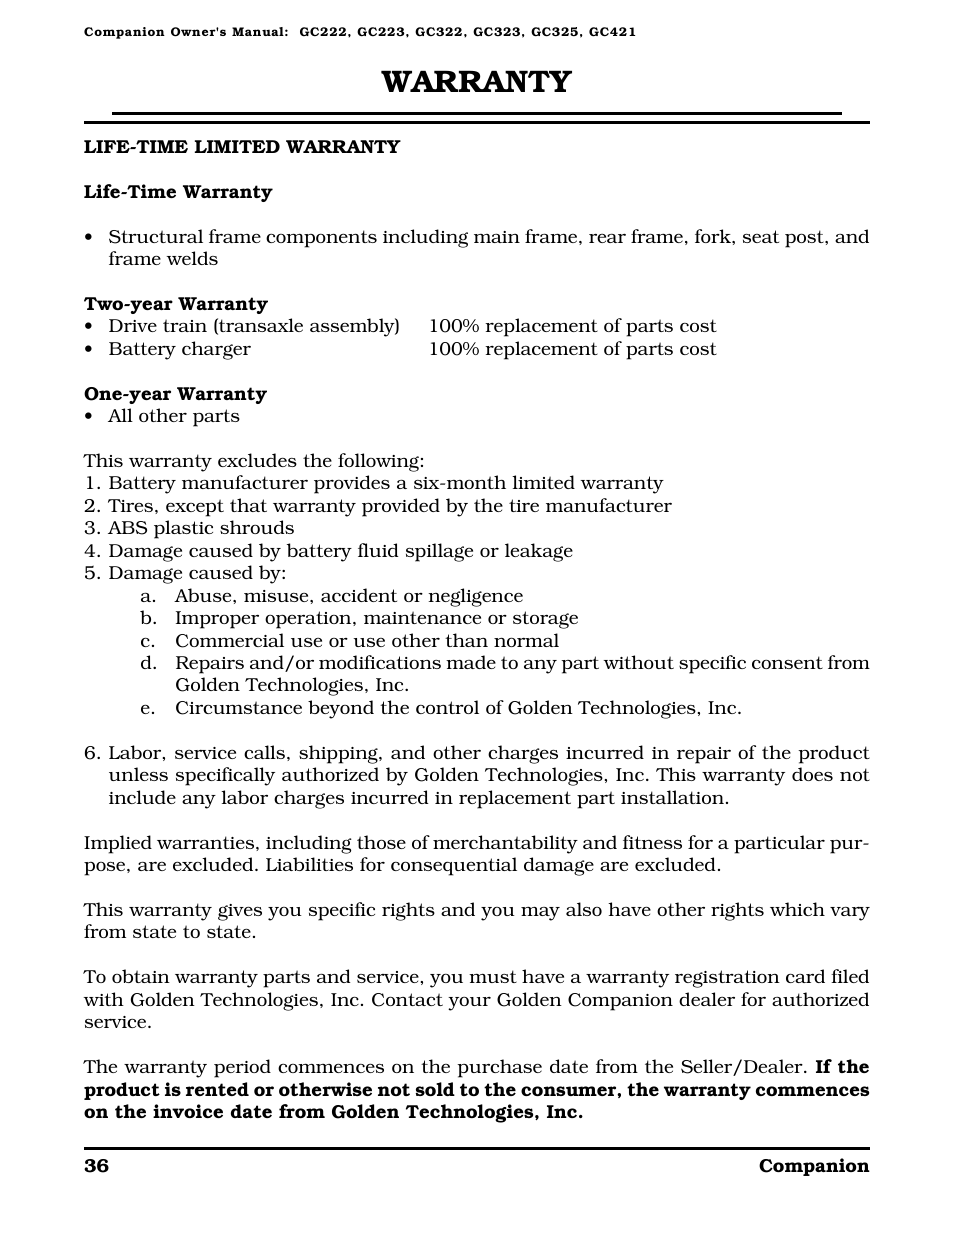 Warranty | Golden Technologies Companion II User Manual | Page 38 / 41